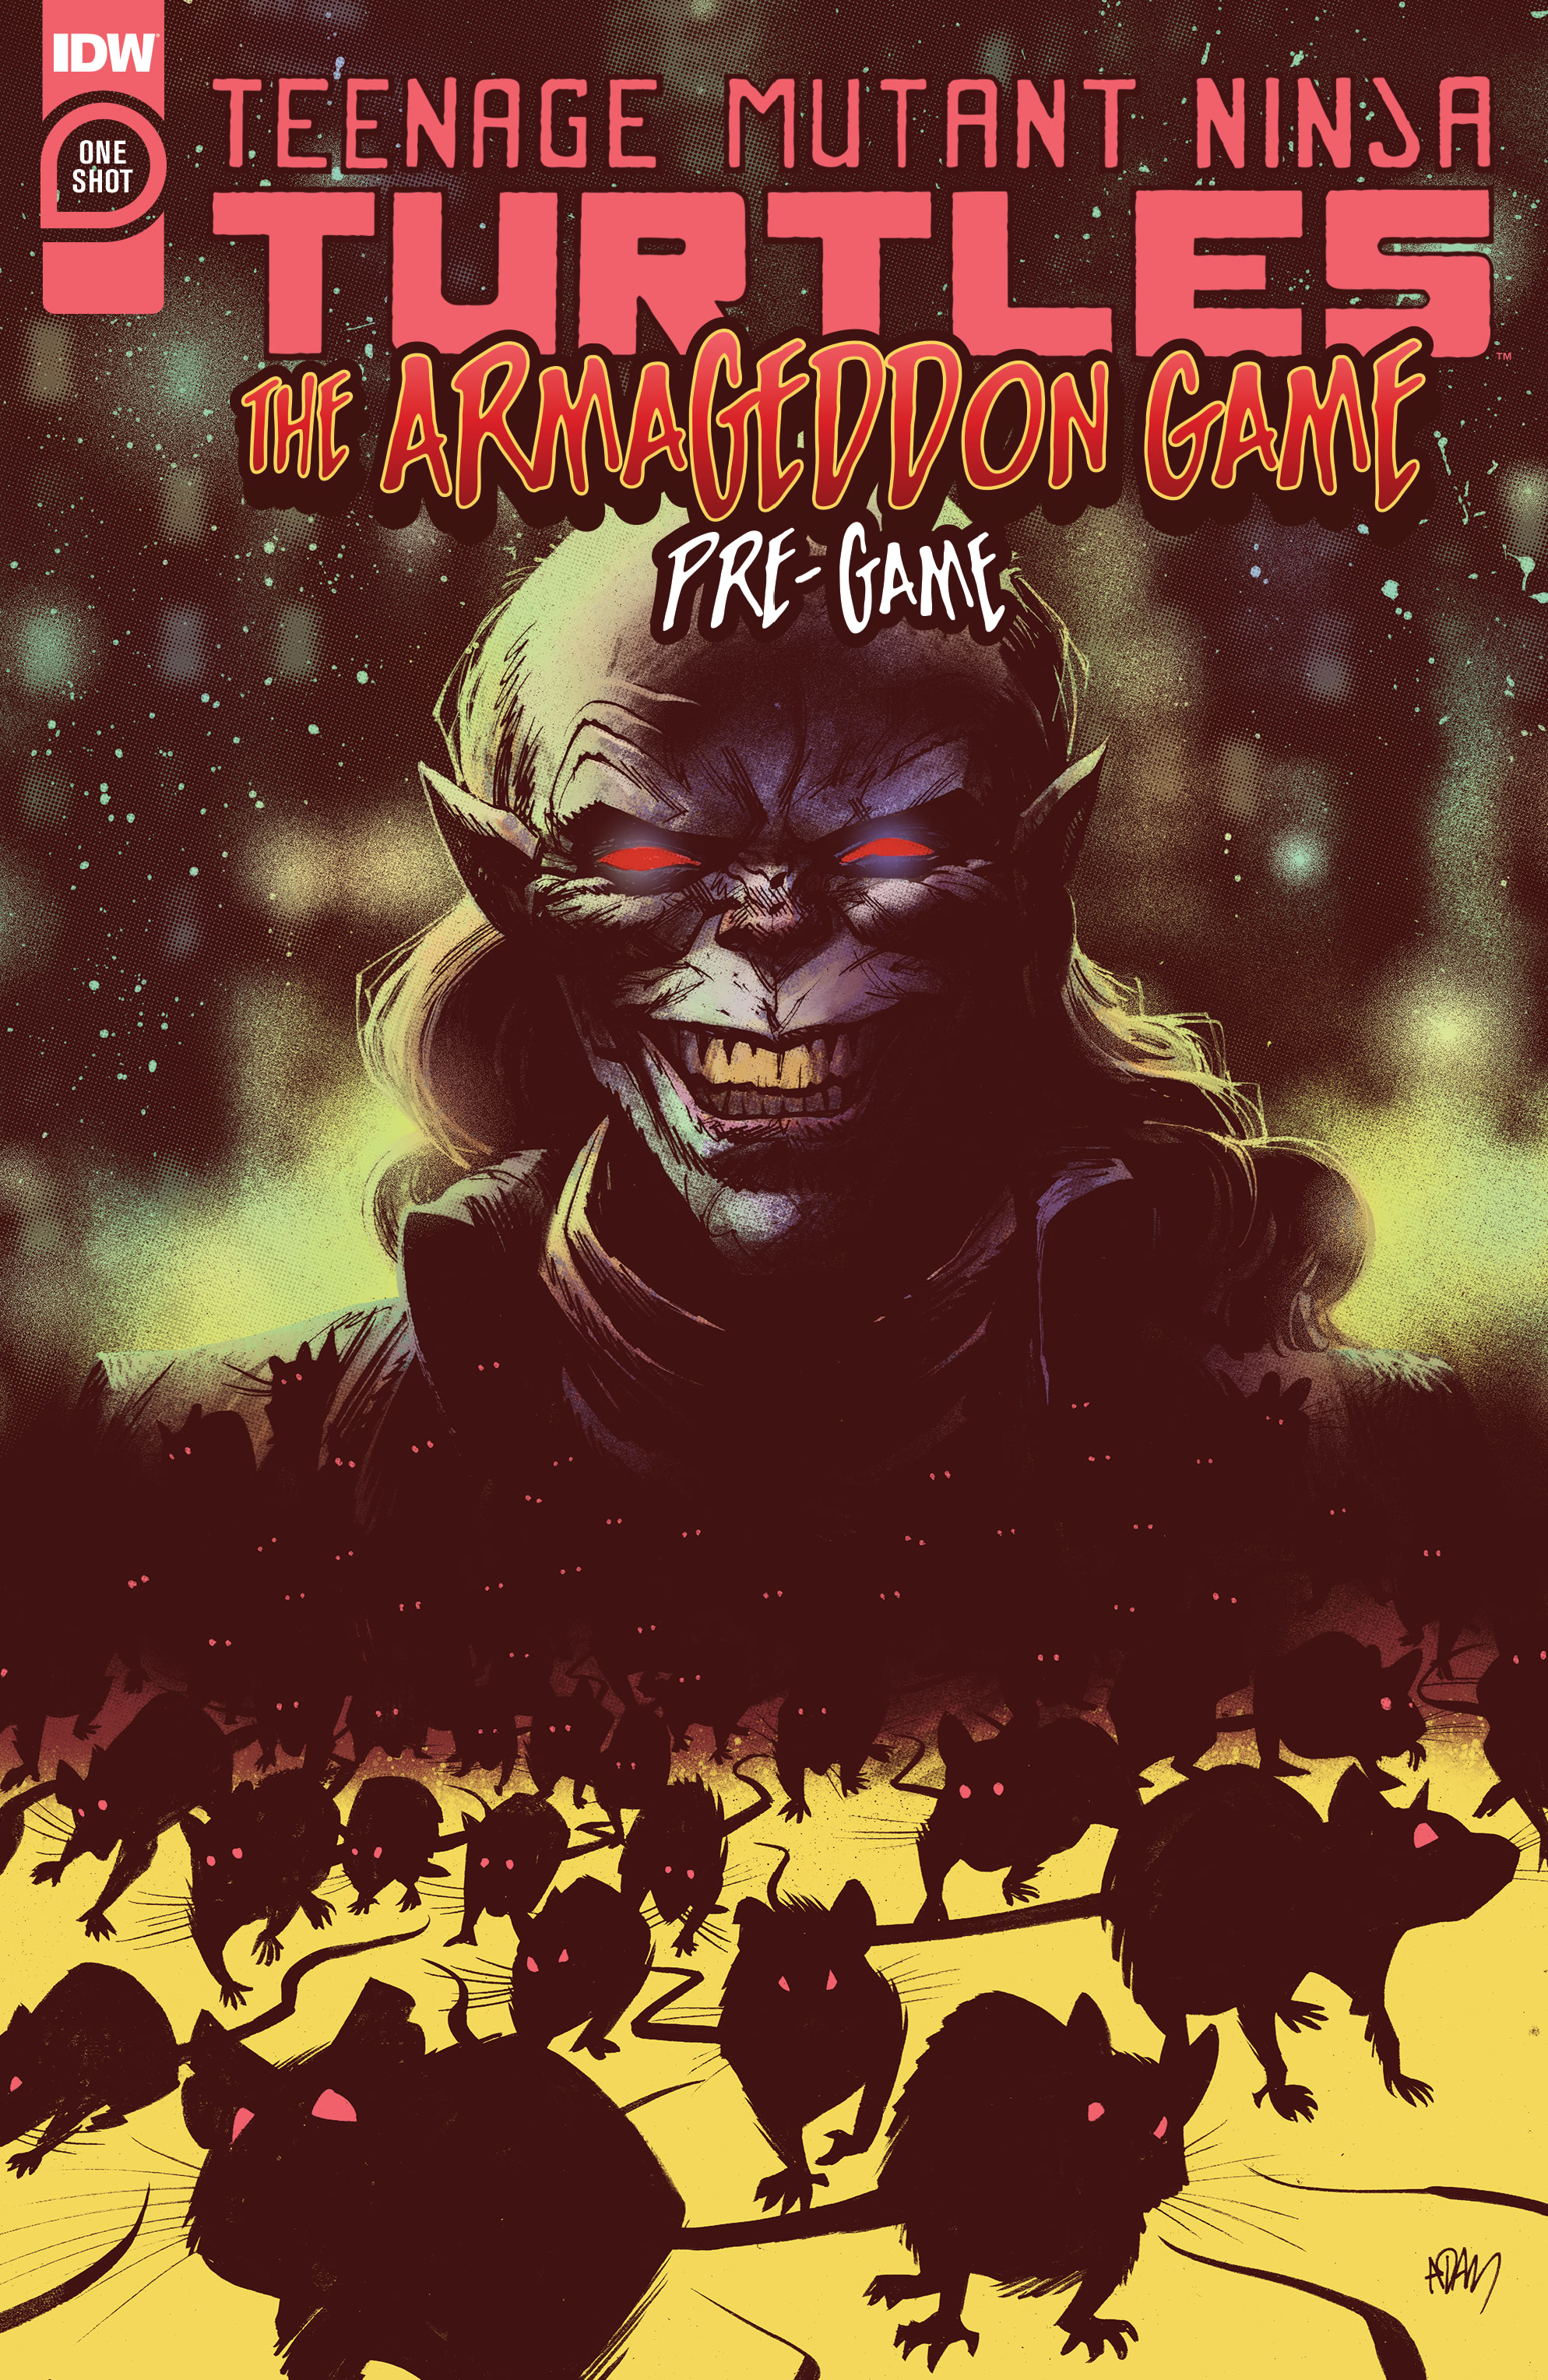 Read online Teenage Mutant Ninja Turtles: The Armageddon Game - Pre-Game comic -  Issue # TPB - 1